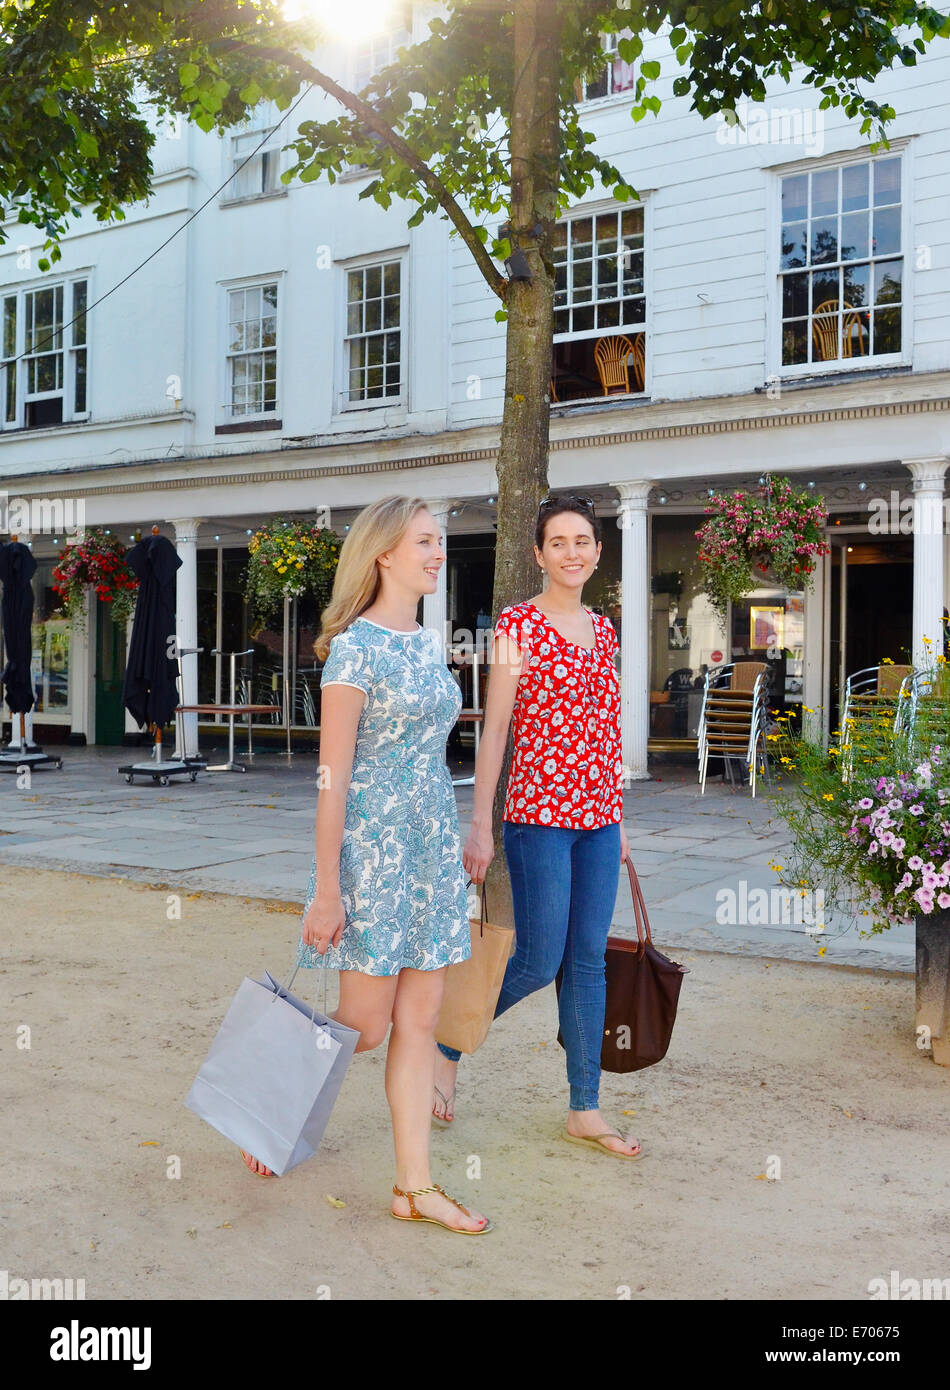 Two young women strolling along street carrying shopping bags Stock Photo